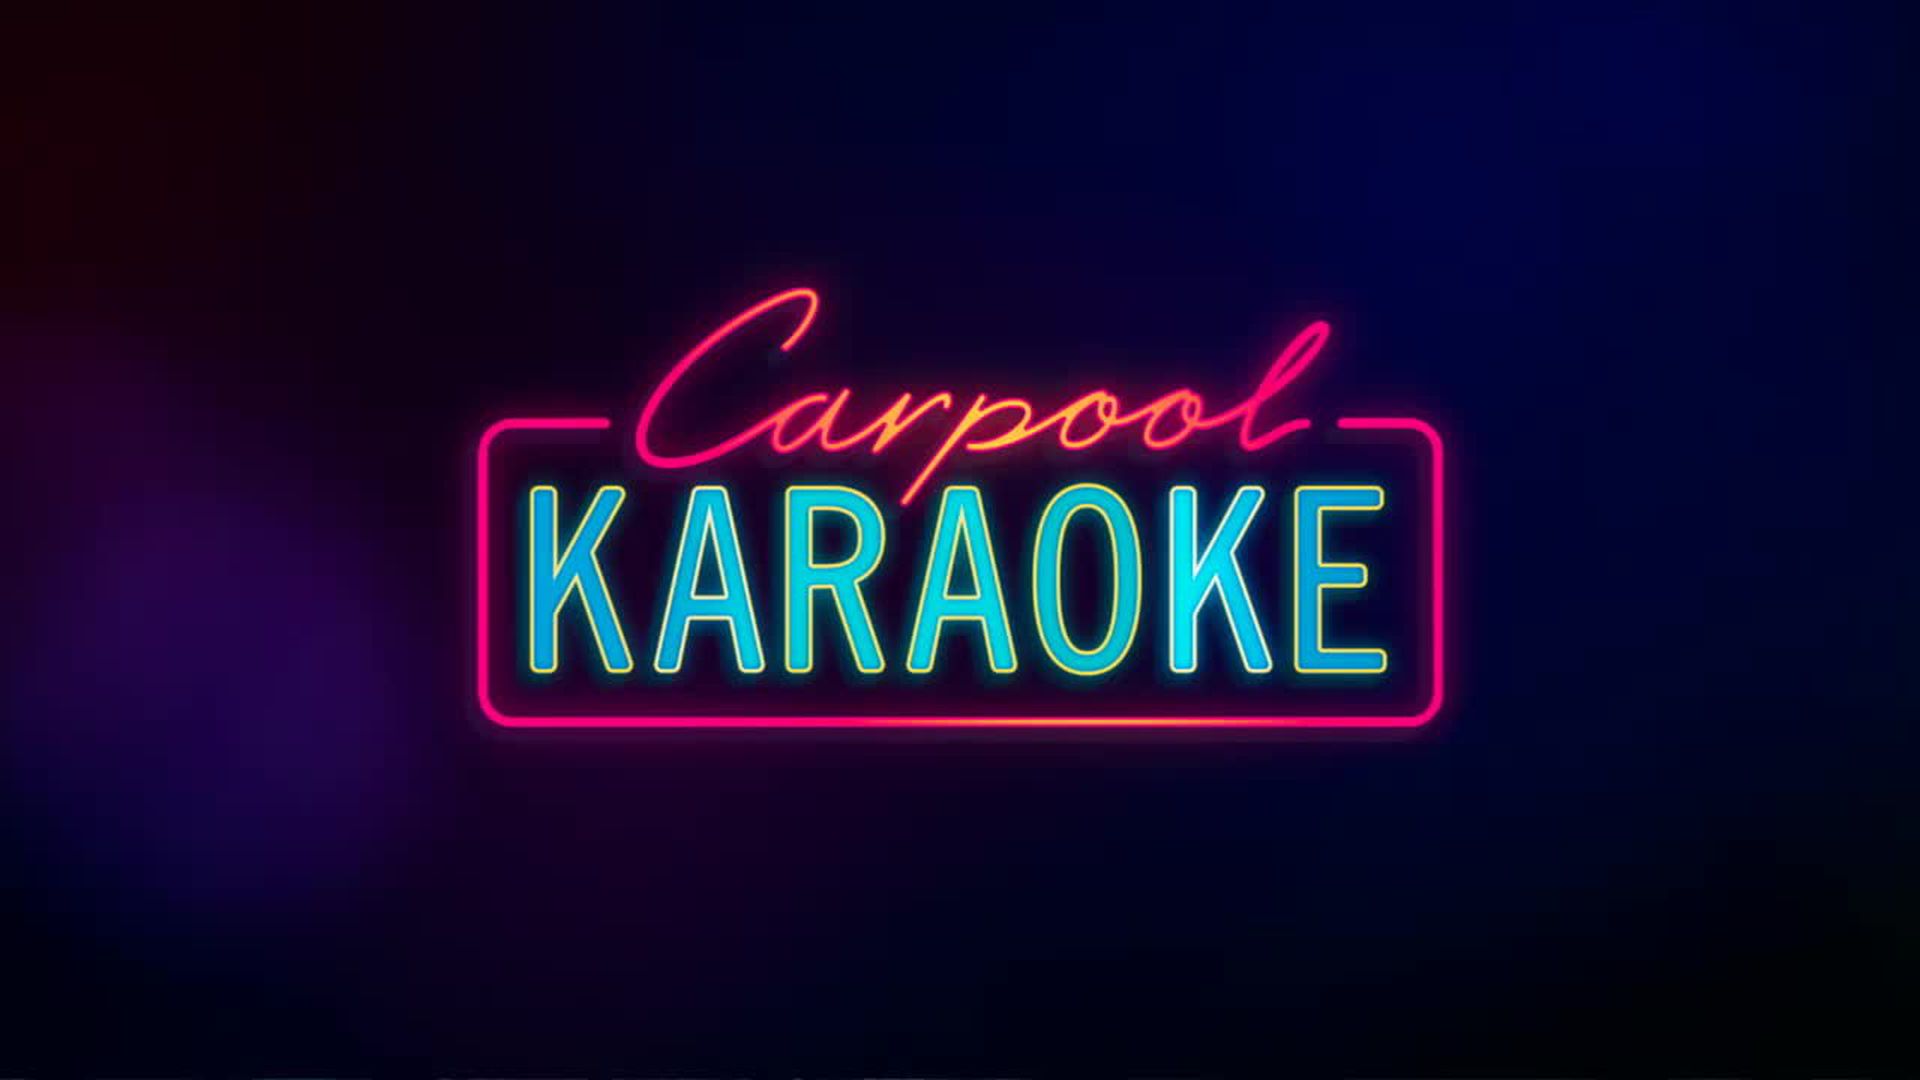 "Carpool Karaoke"